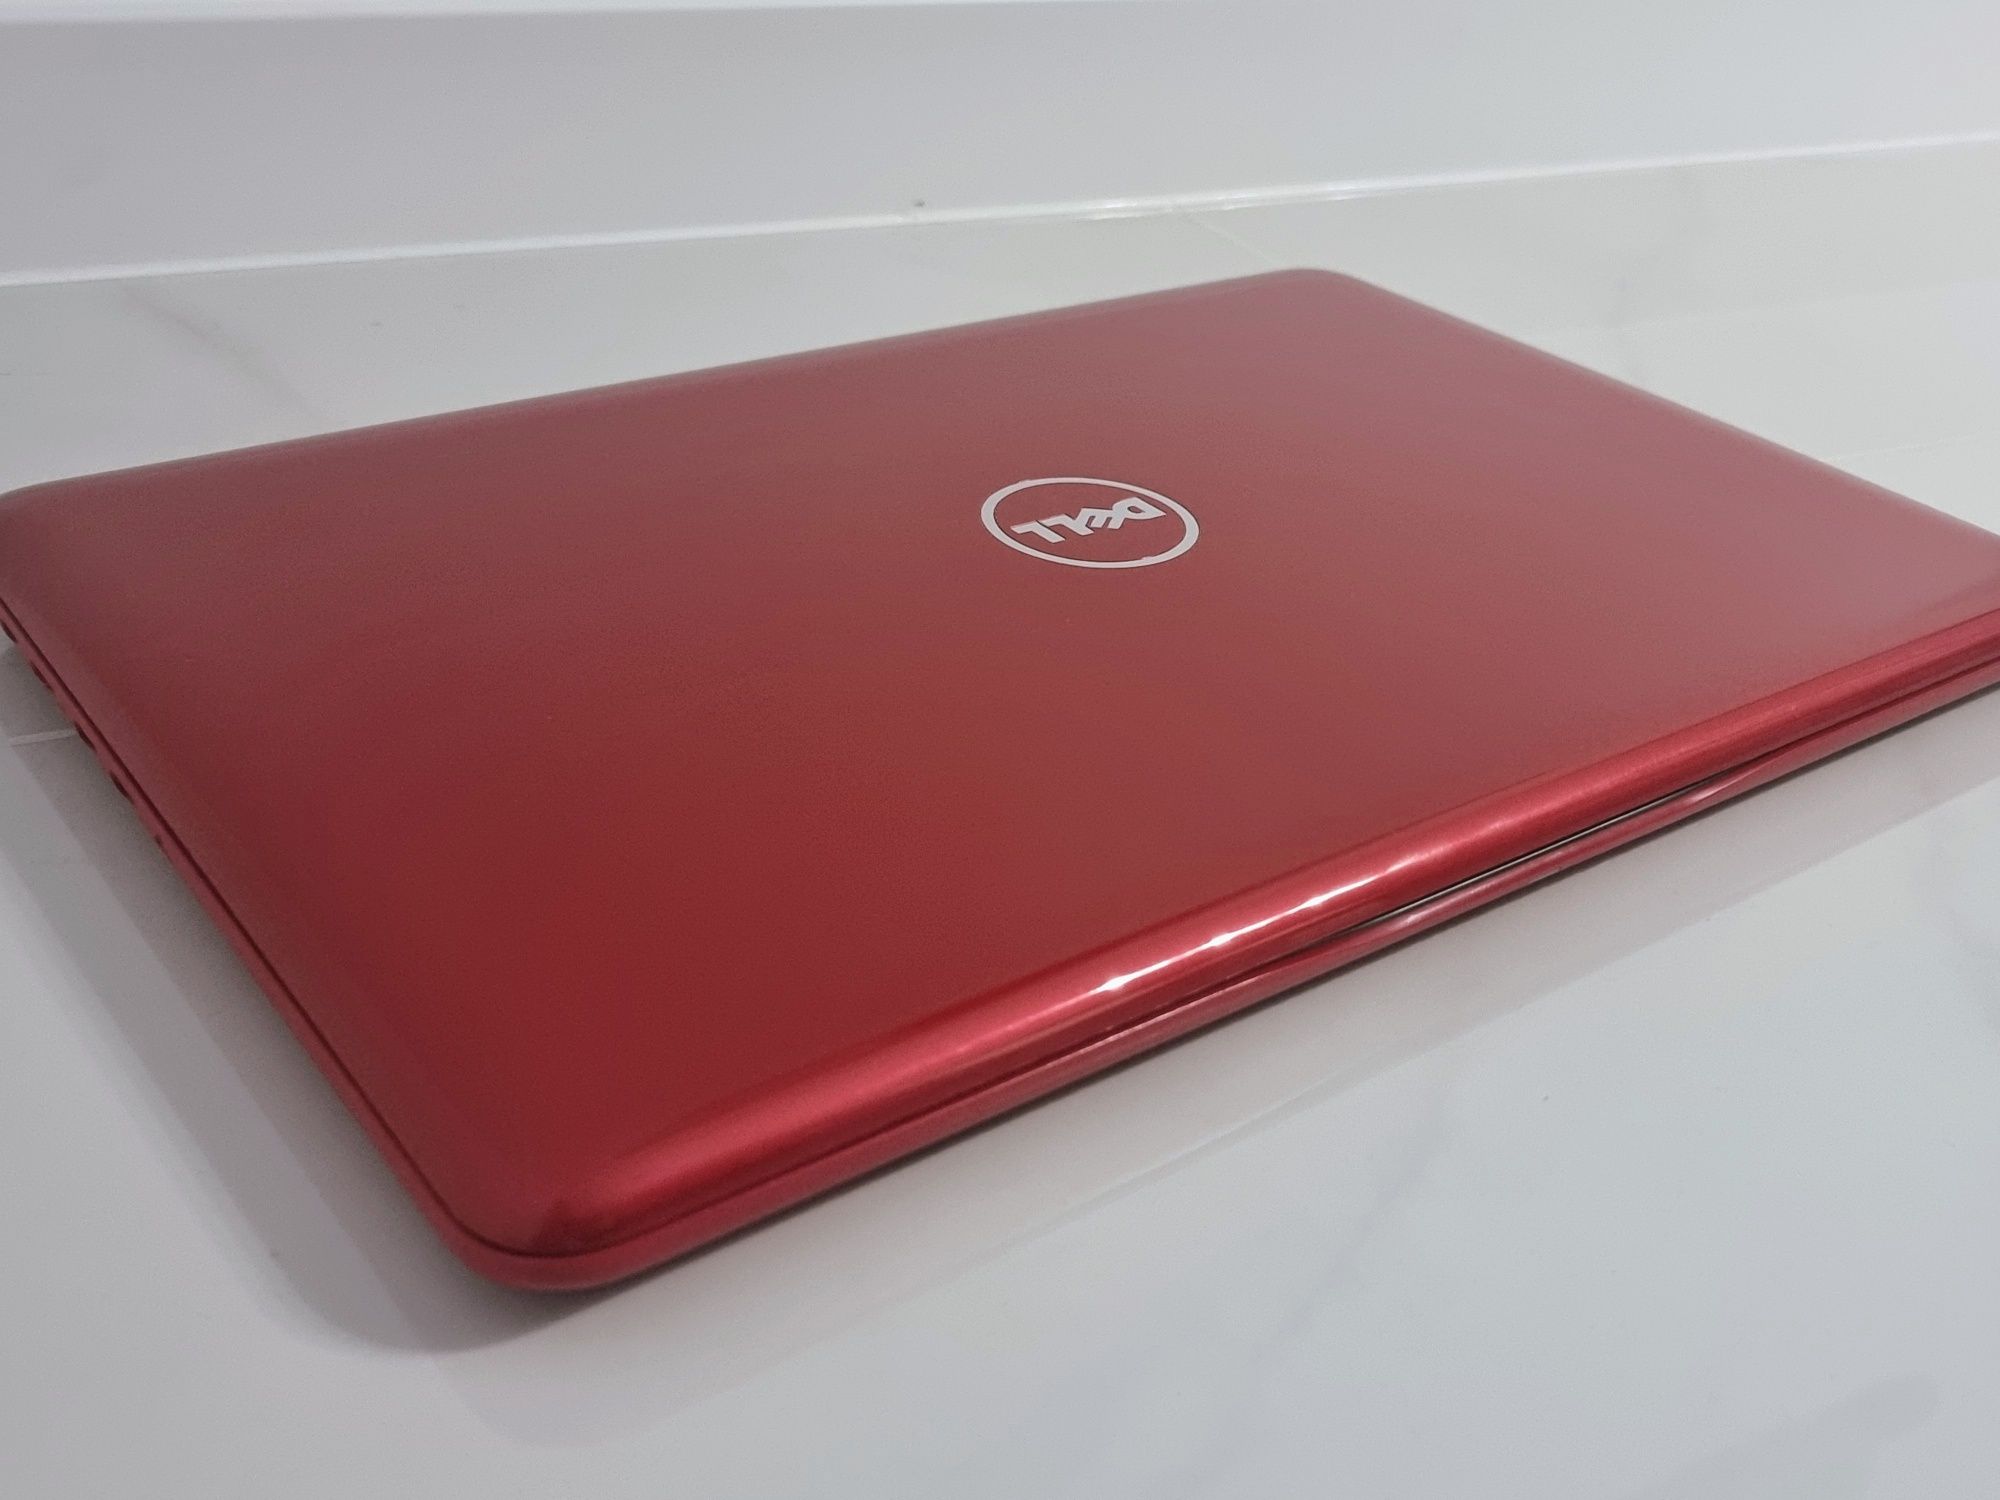 Laptop Notebook DELL Inspiron 17 seria 5000 czerwony